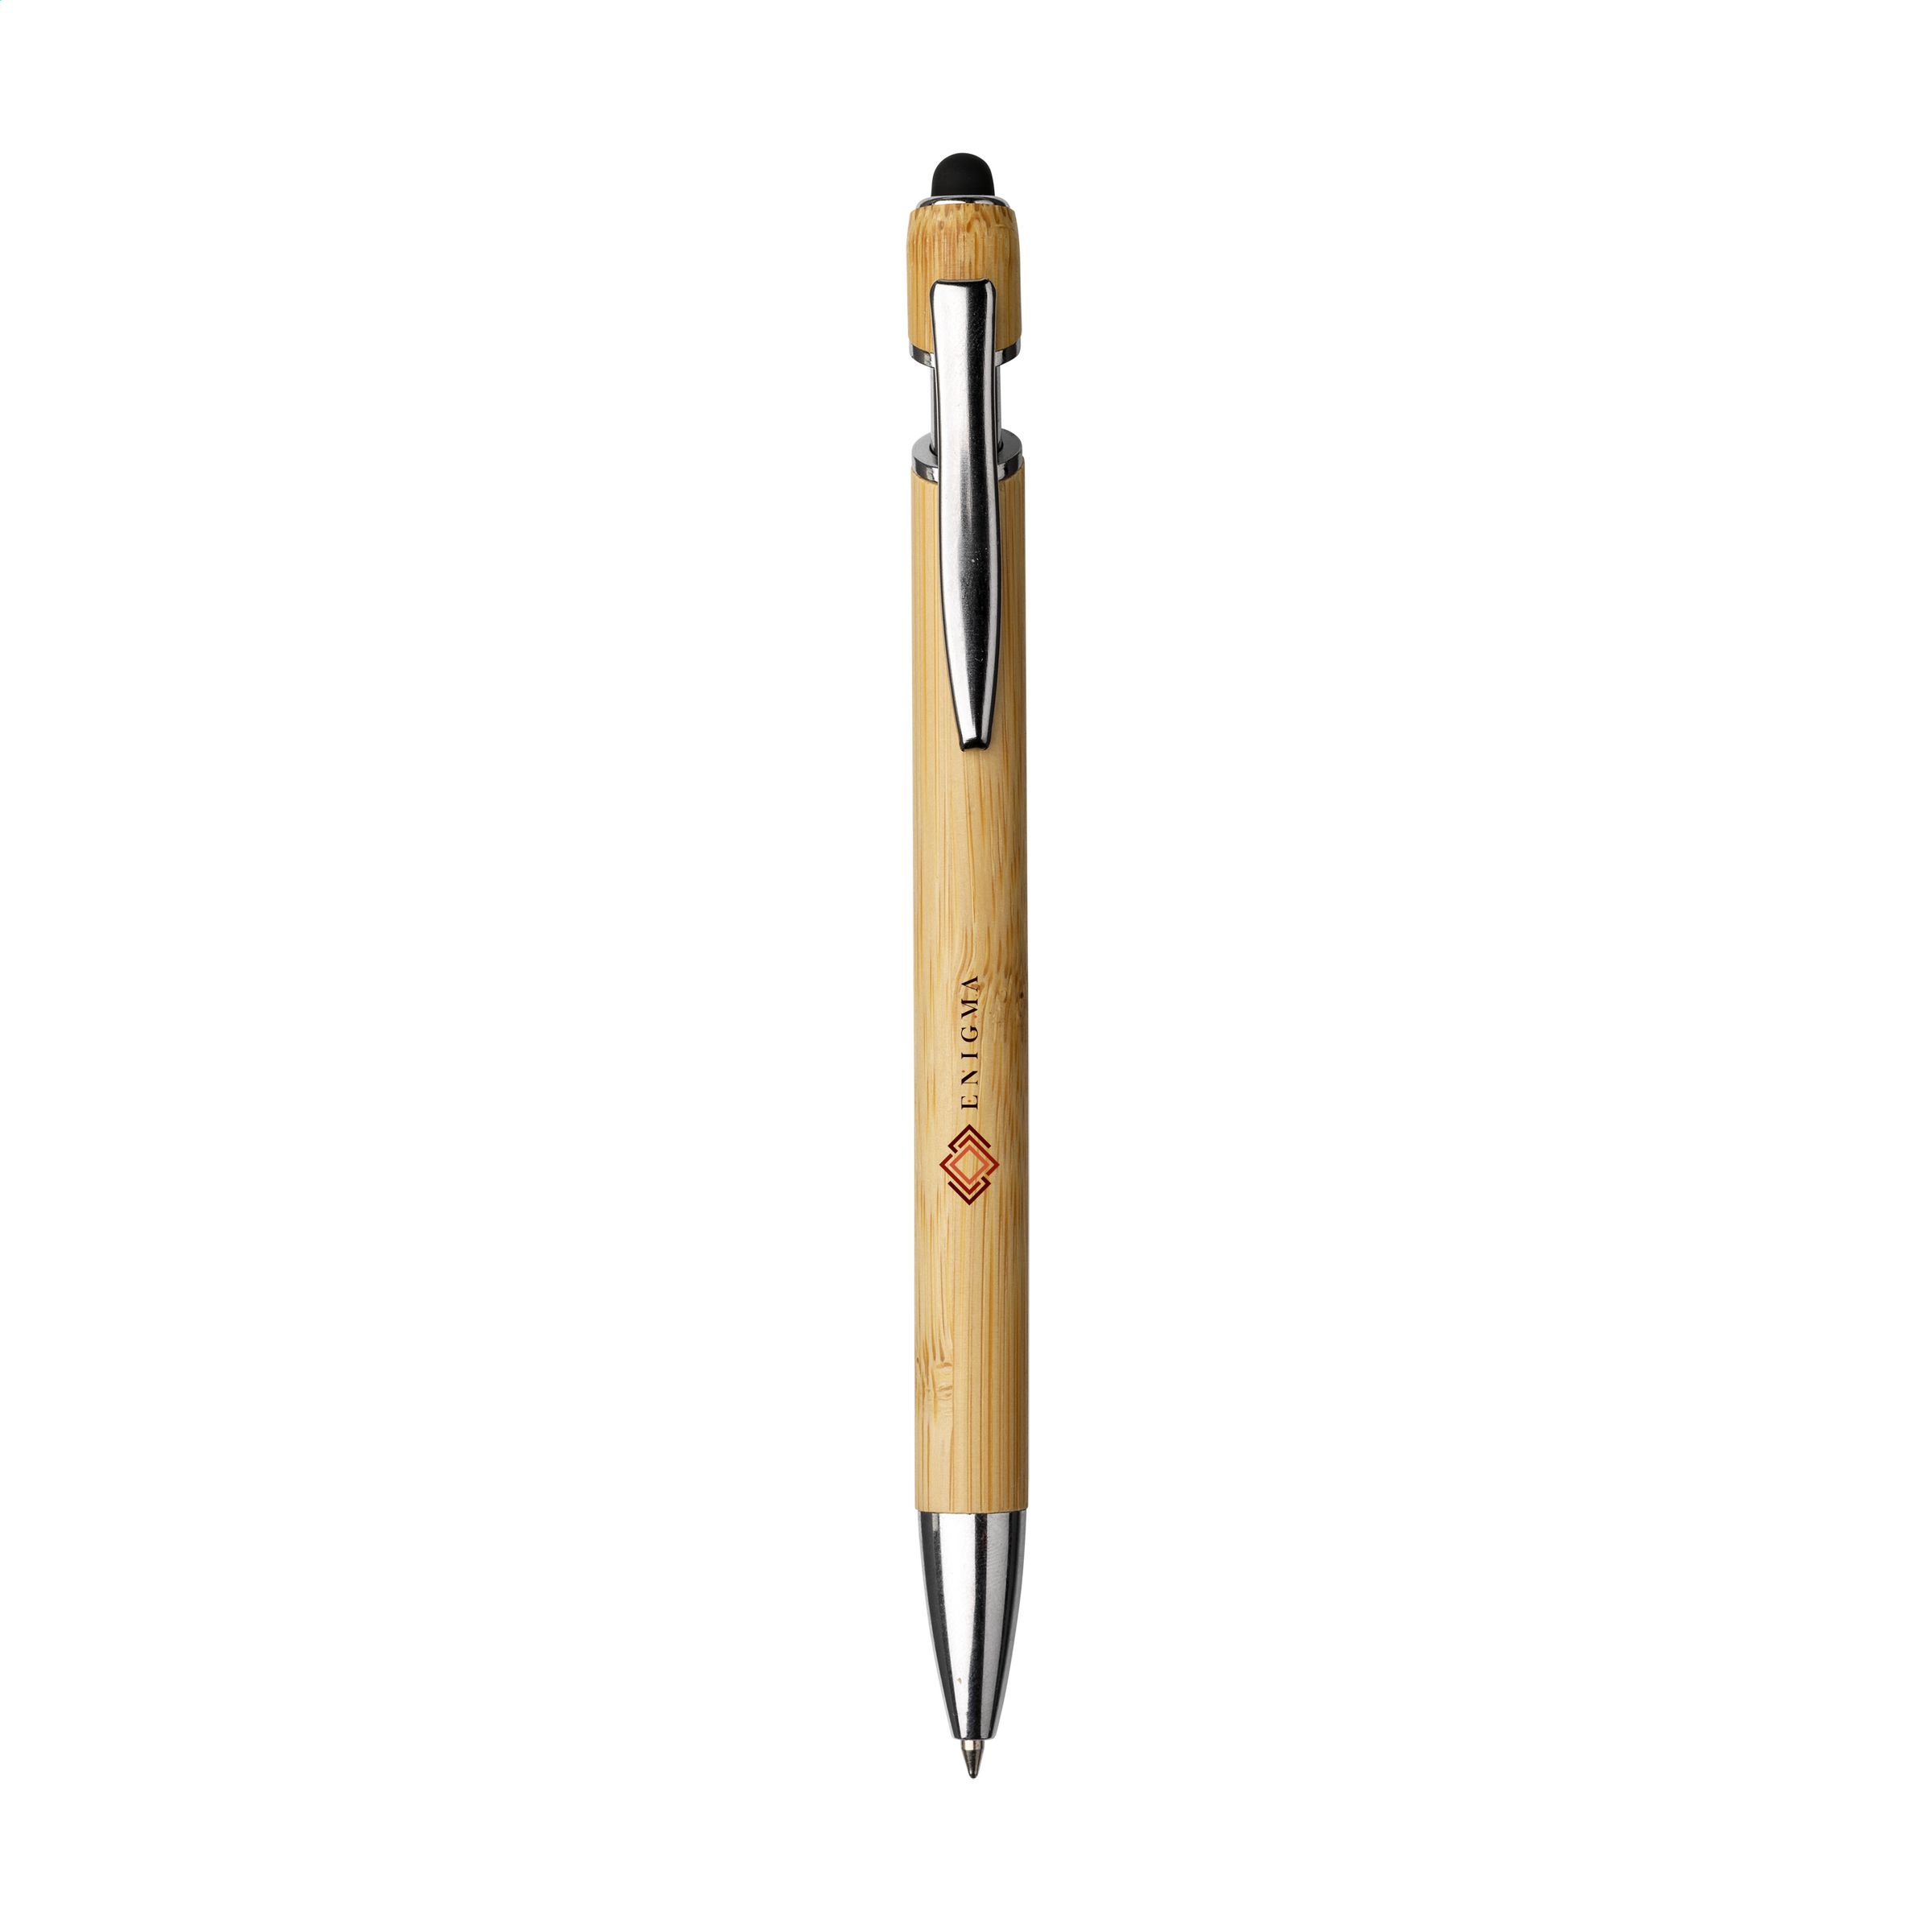 Luca Touch FSC-100% Bamboo stylus pen - Ashley Heath